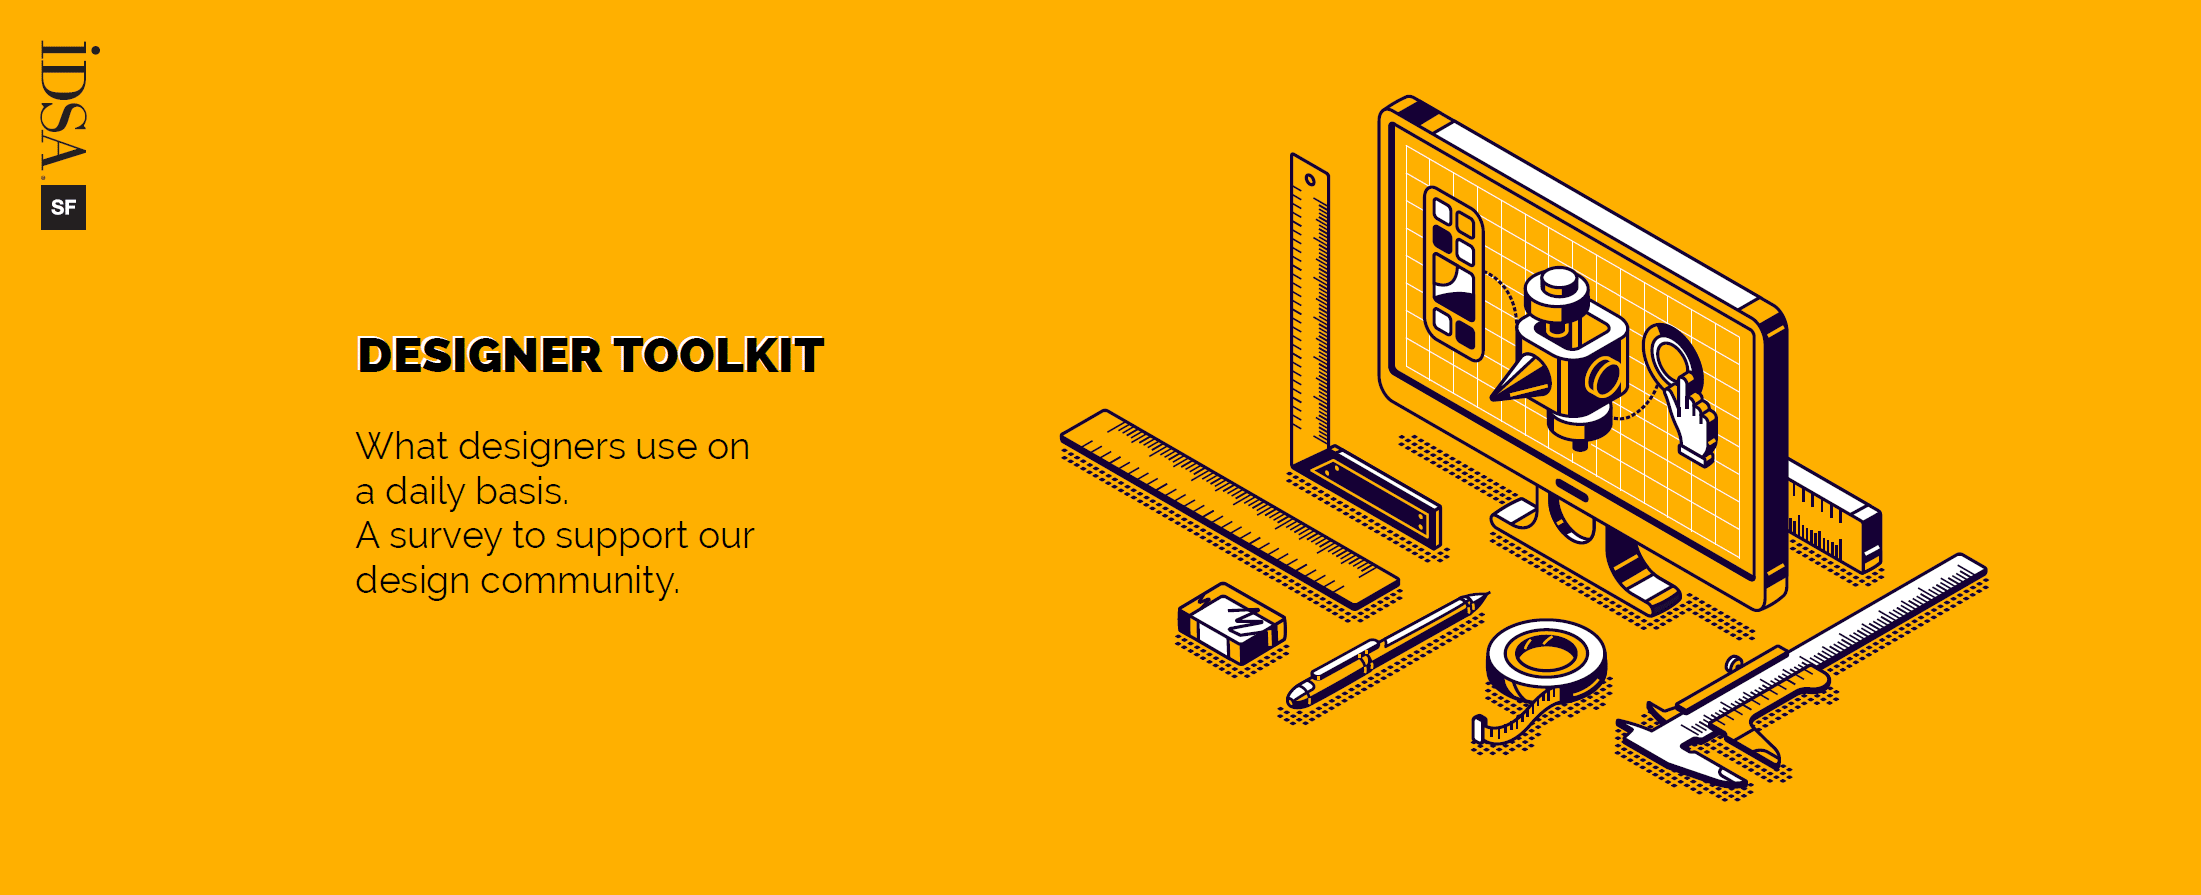 Designer-Toolkit-banner.png